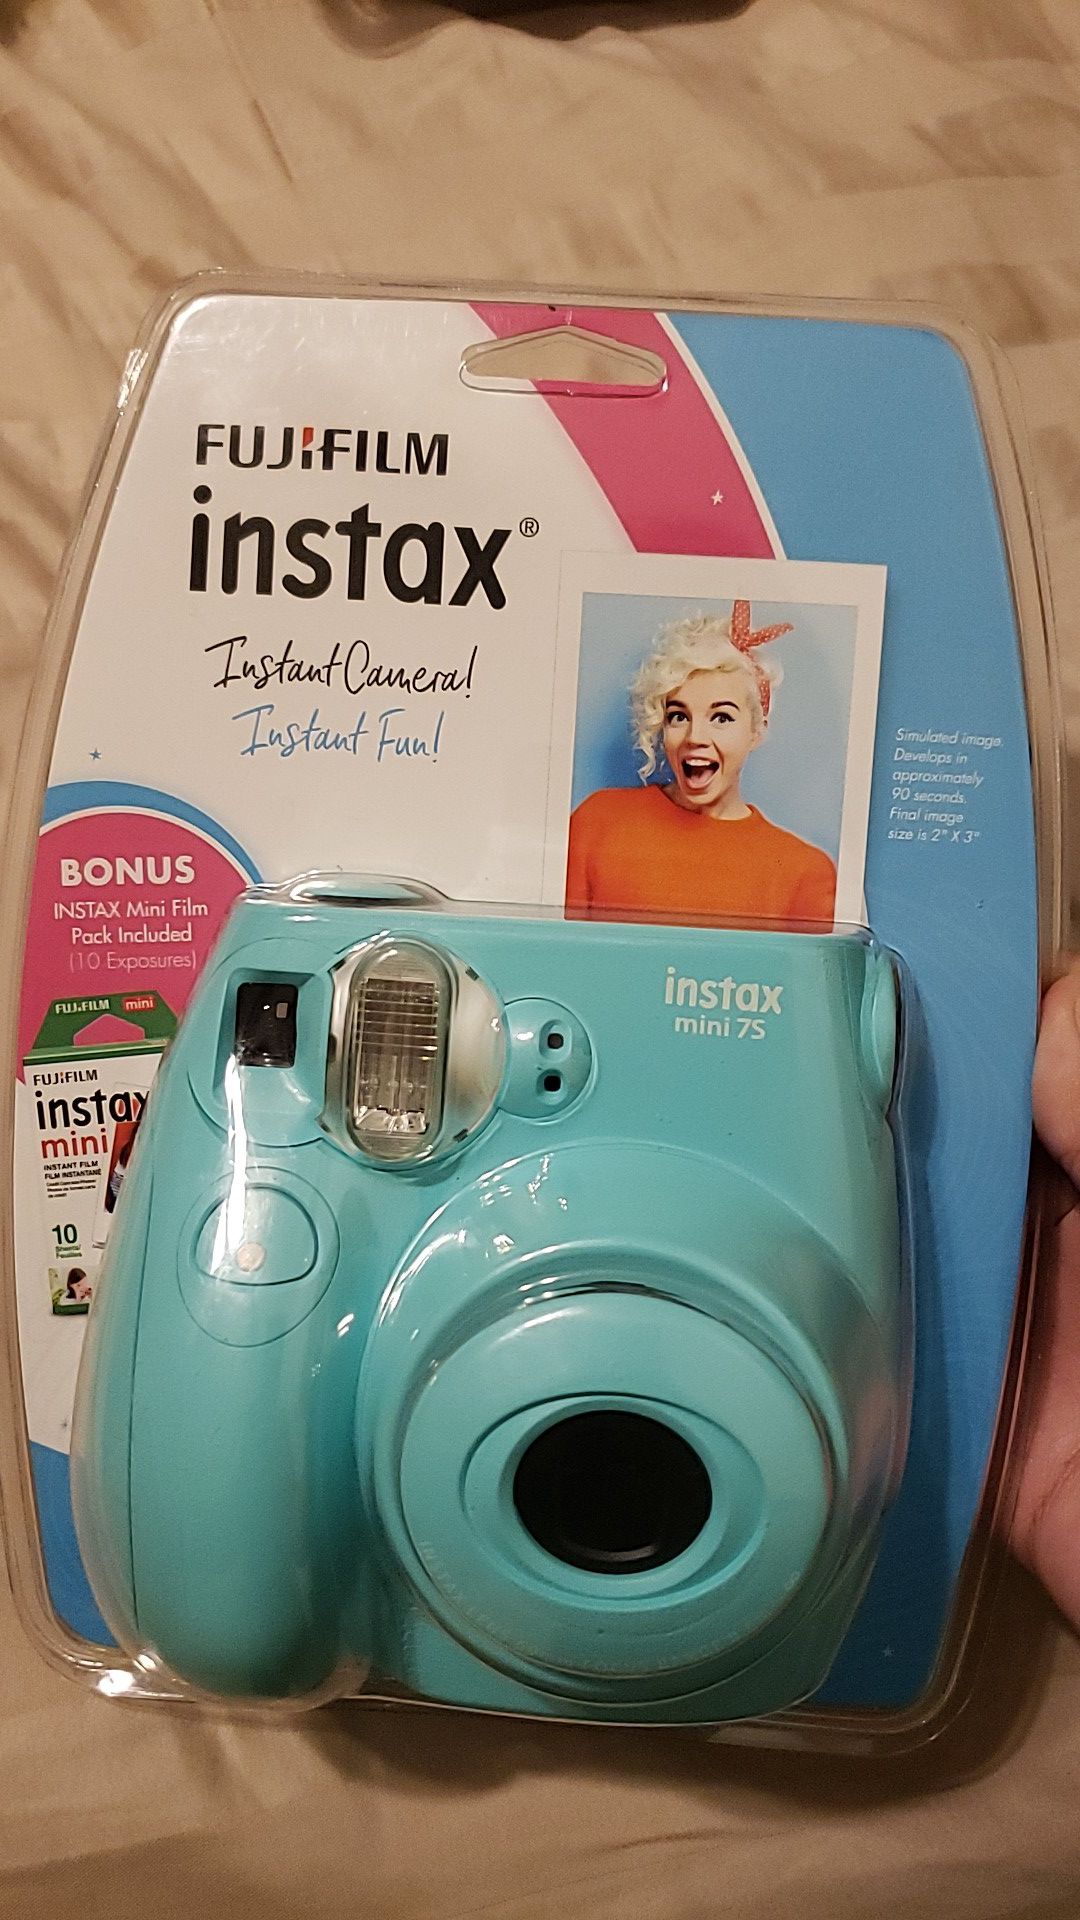 TWO NEW-Fujifilm Instax Camera's